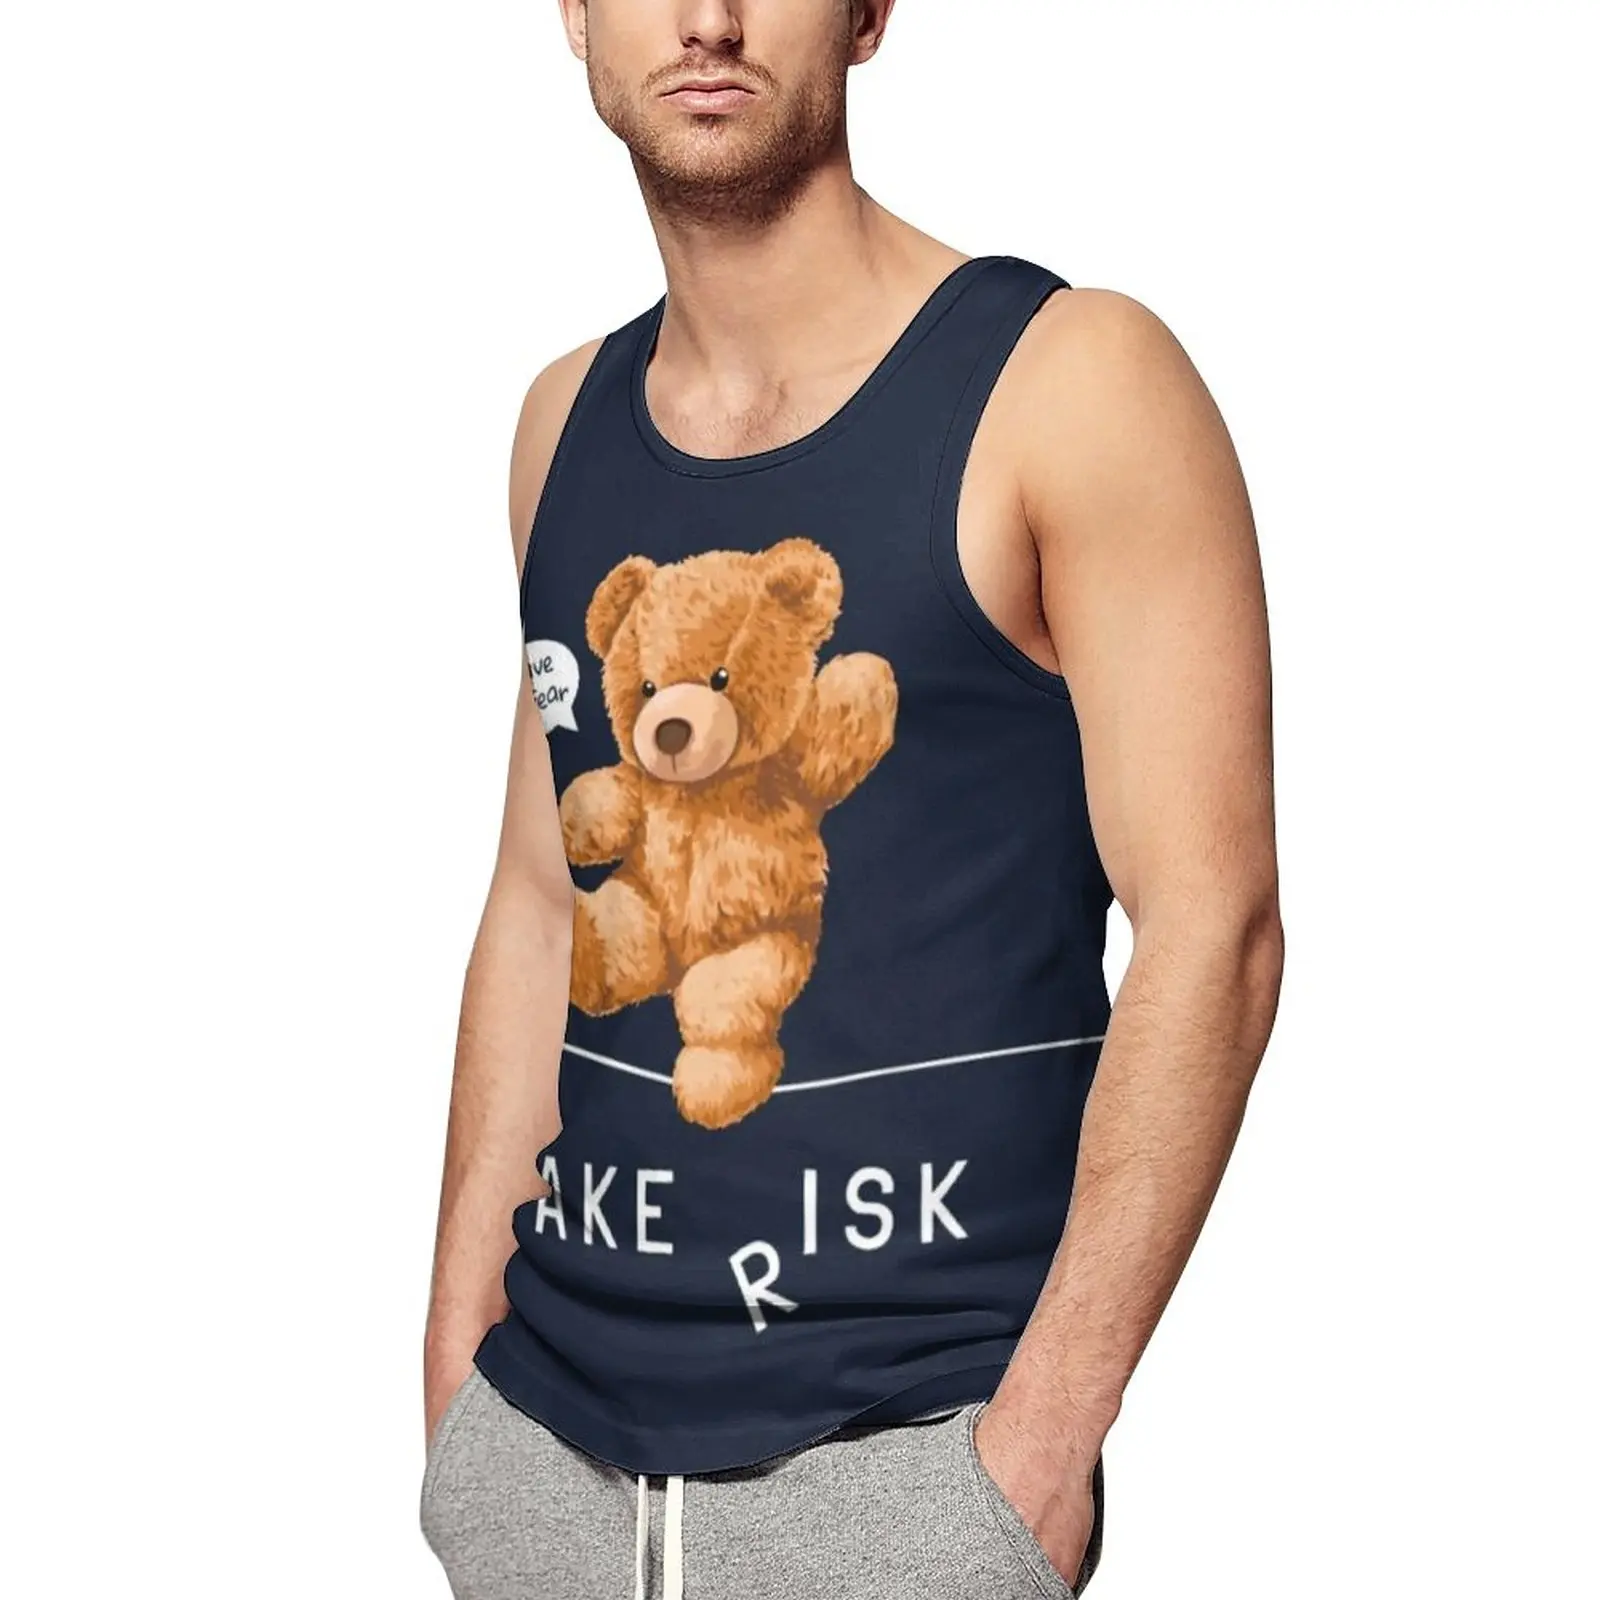 

Bear Toy Walking On String Tank Top Men Have No Fear Take Risk Fashion Tops Summer Training Printed Sleeveless Shirts Plus Size